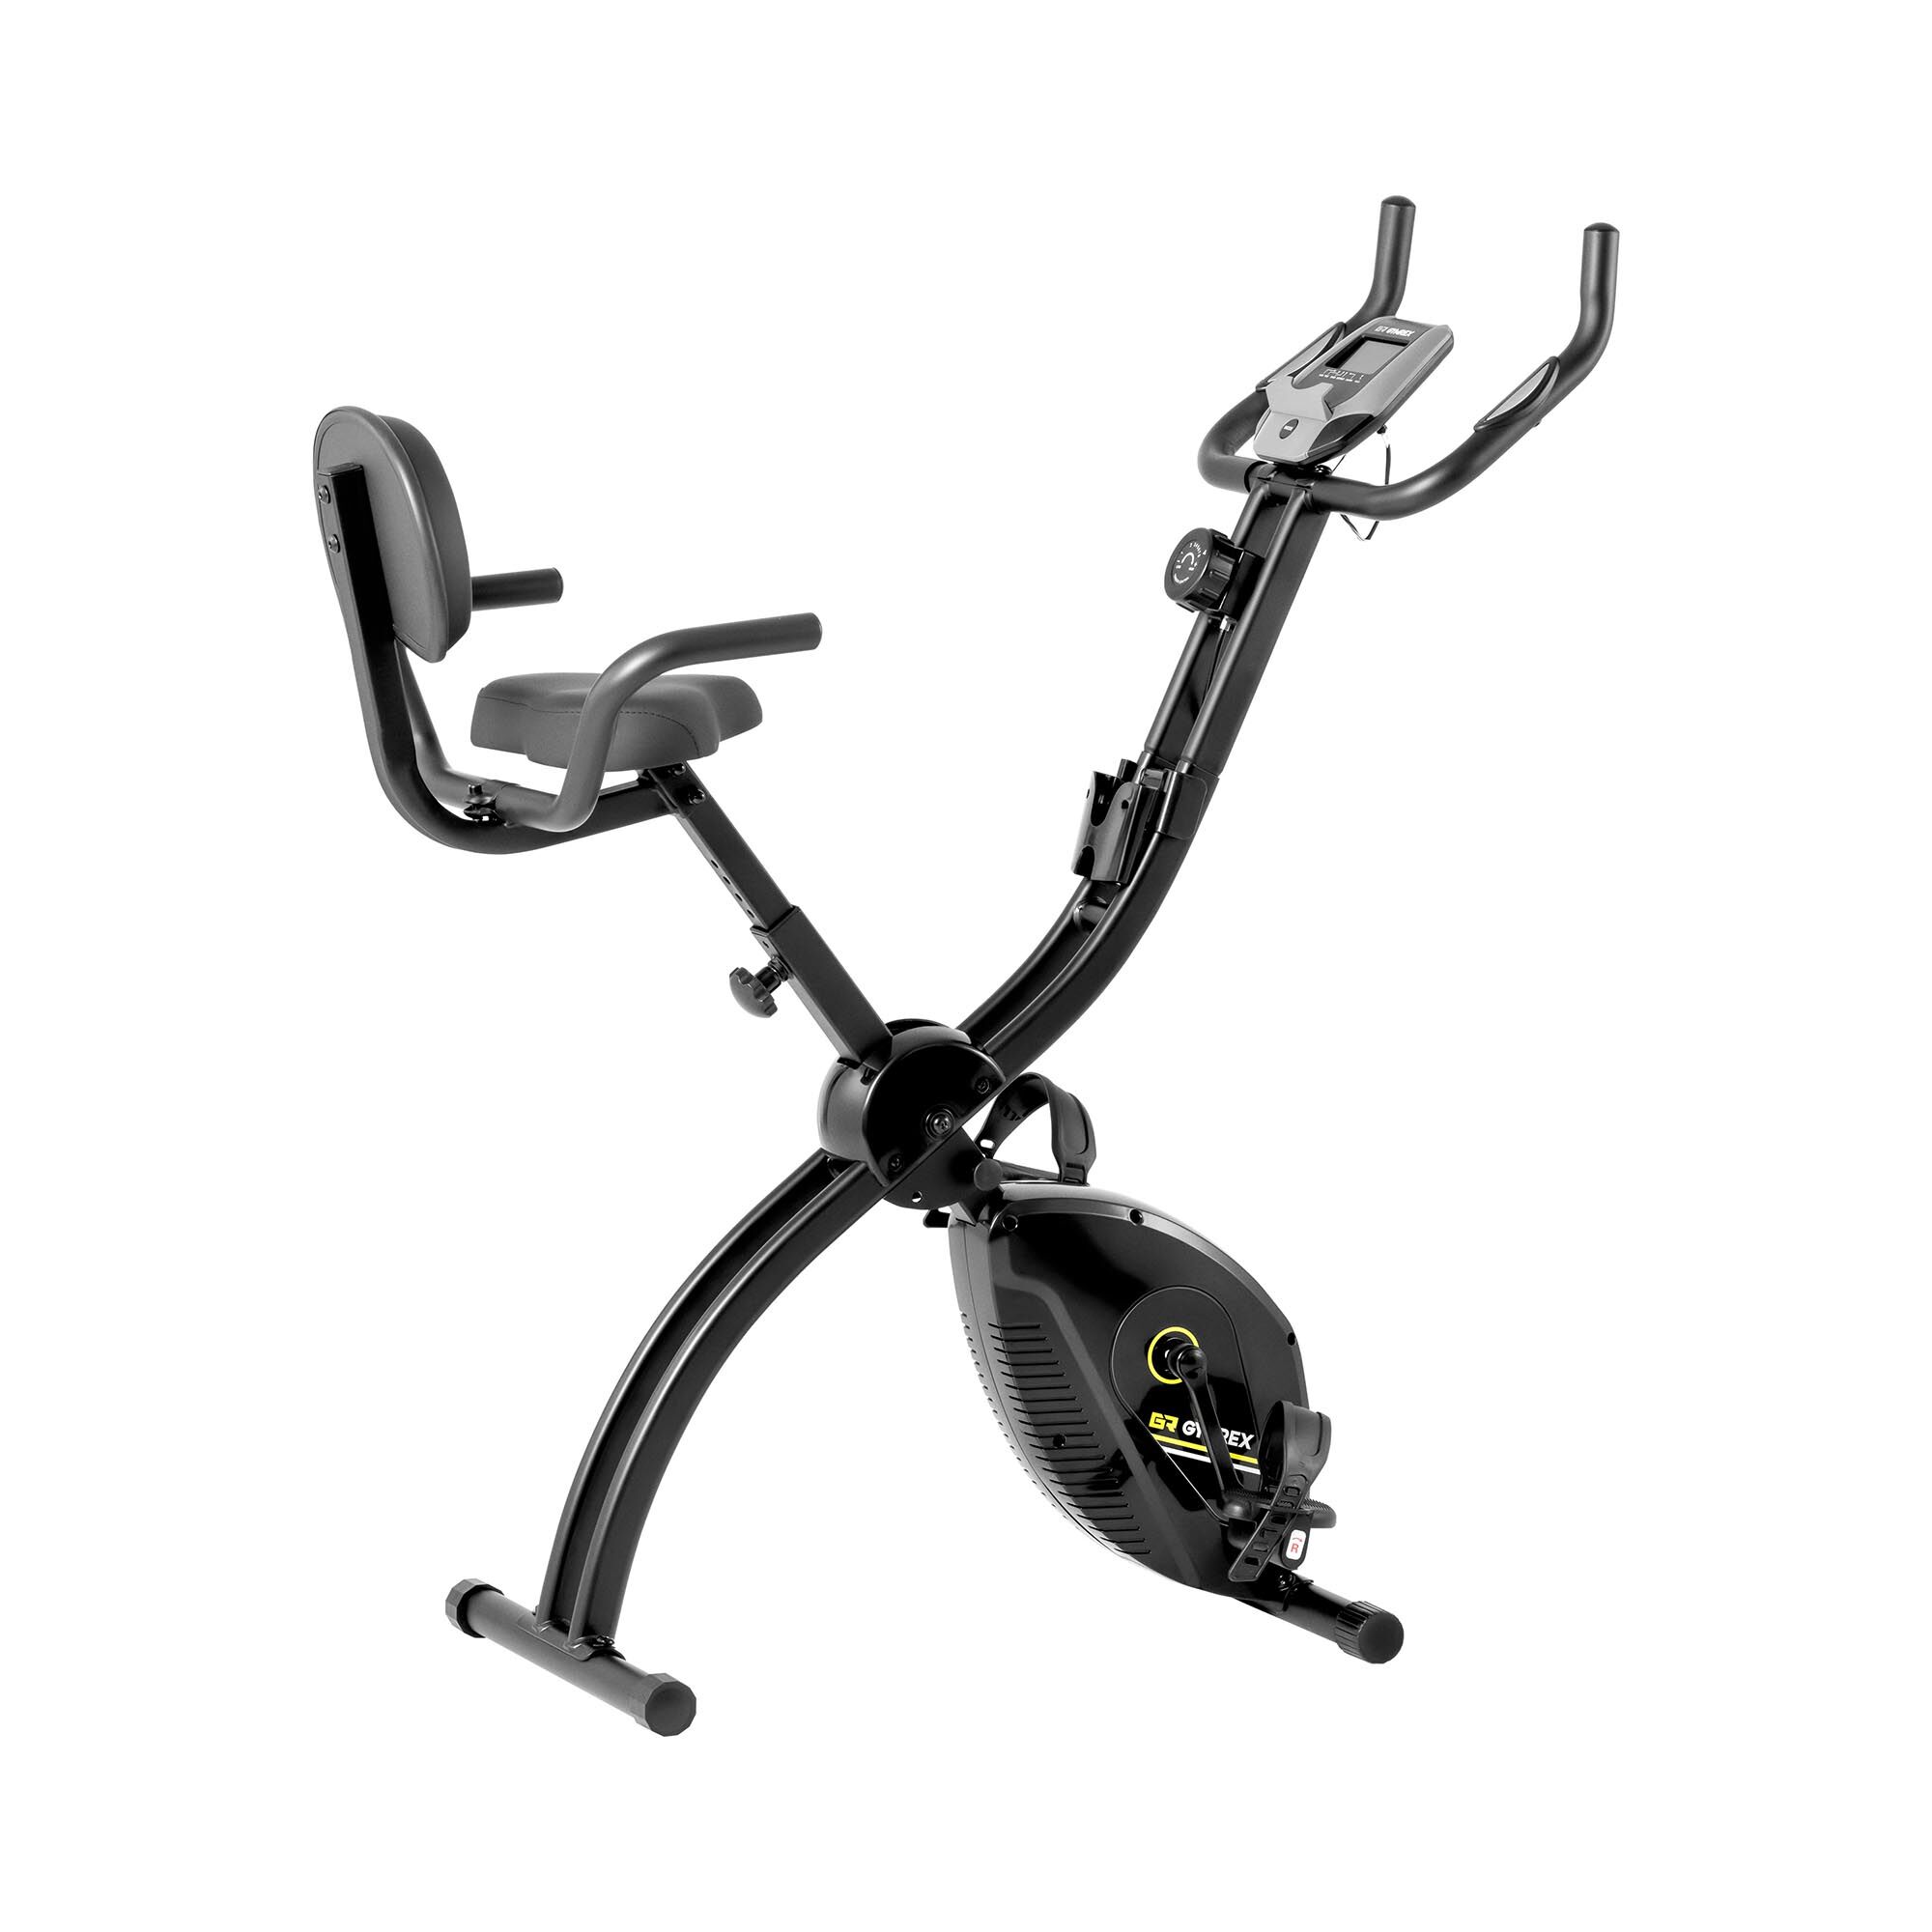 Gymrex Exercise Bike - collapsible - backrest - additional handles - black / red